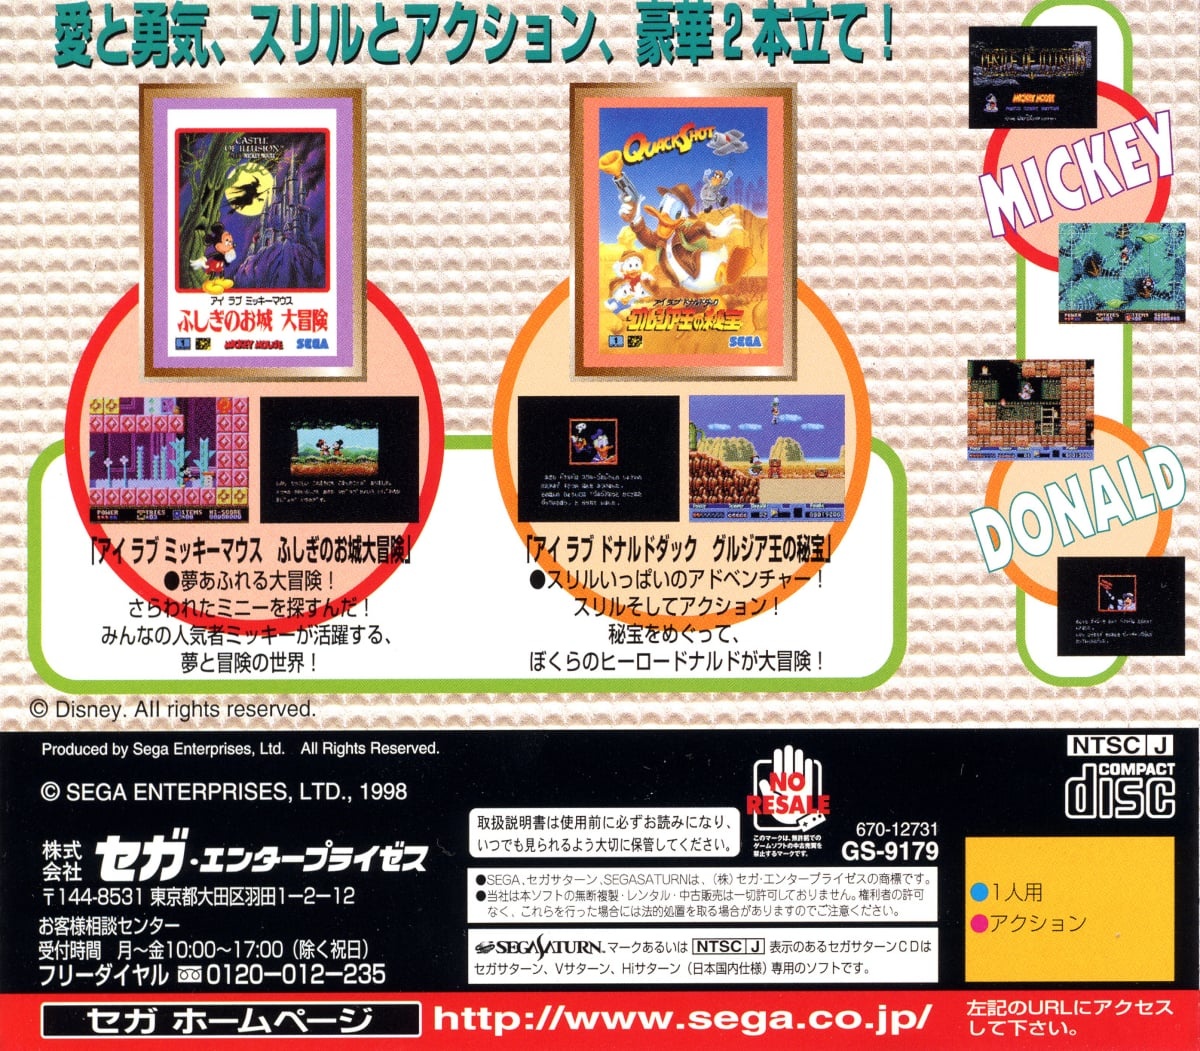 Capa do jogo Sega Ages I Love Mickey Mouse: Fushigi no Oshiro Daibouken/I Love Donald Duck: Guruzia Ou no Hihou